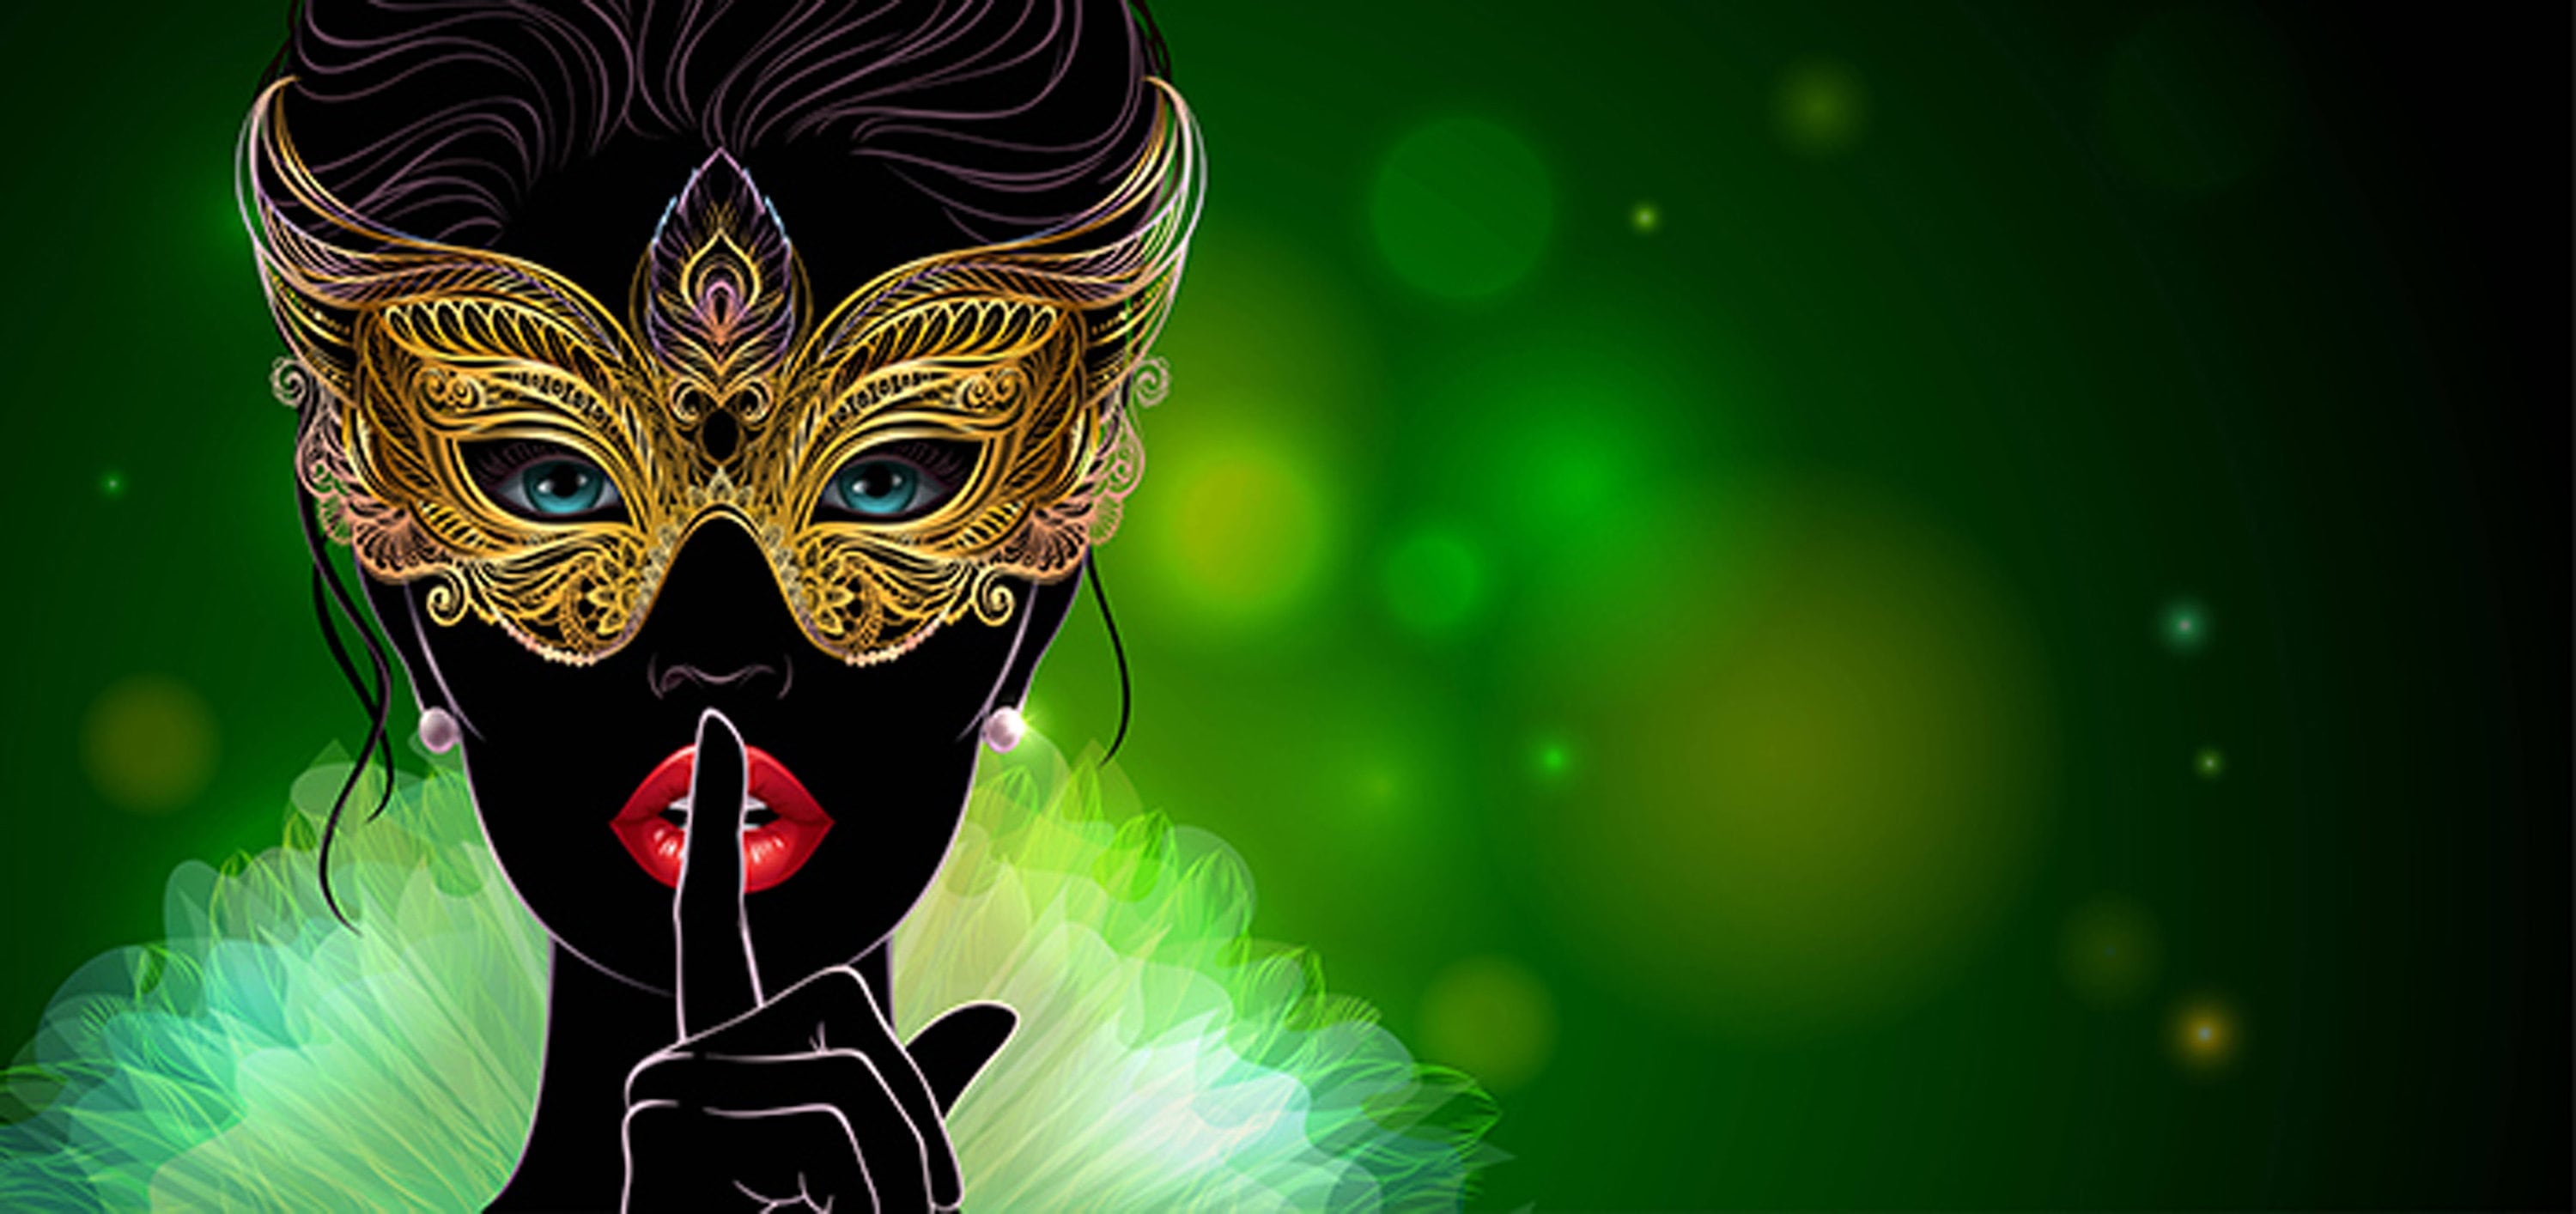 Masquerade Mask Backdrop Green Background Printed Fabric Etsy